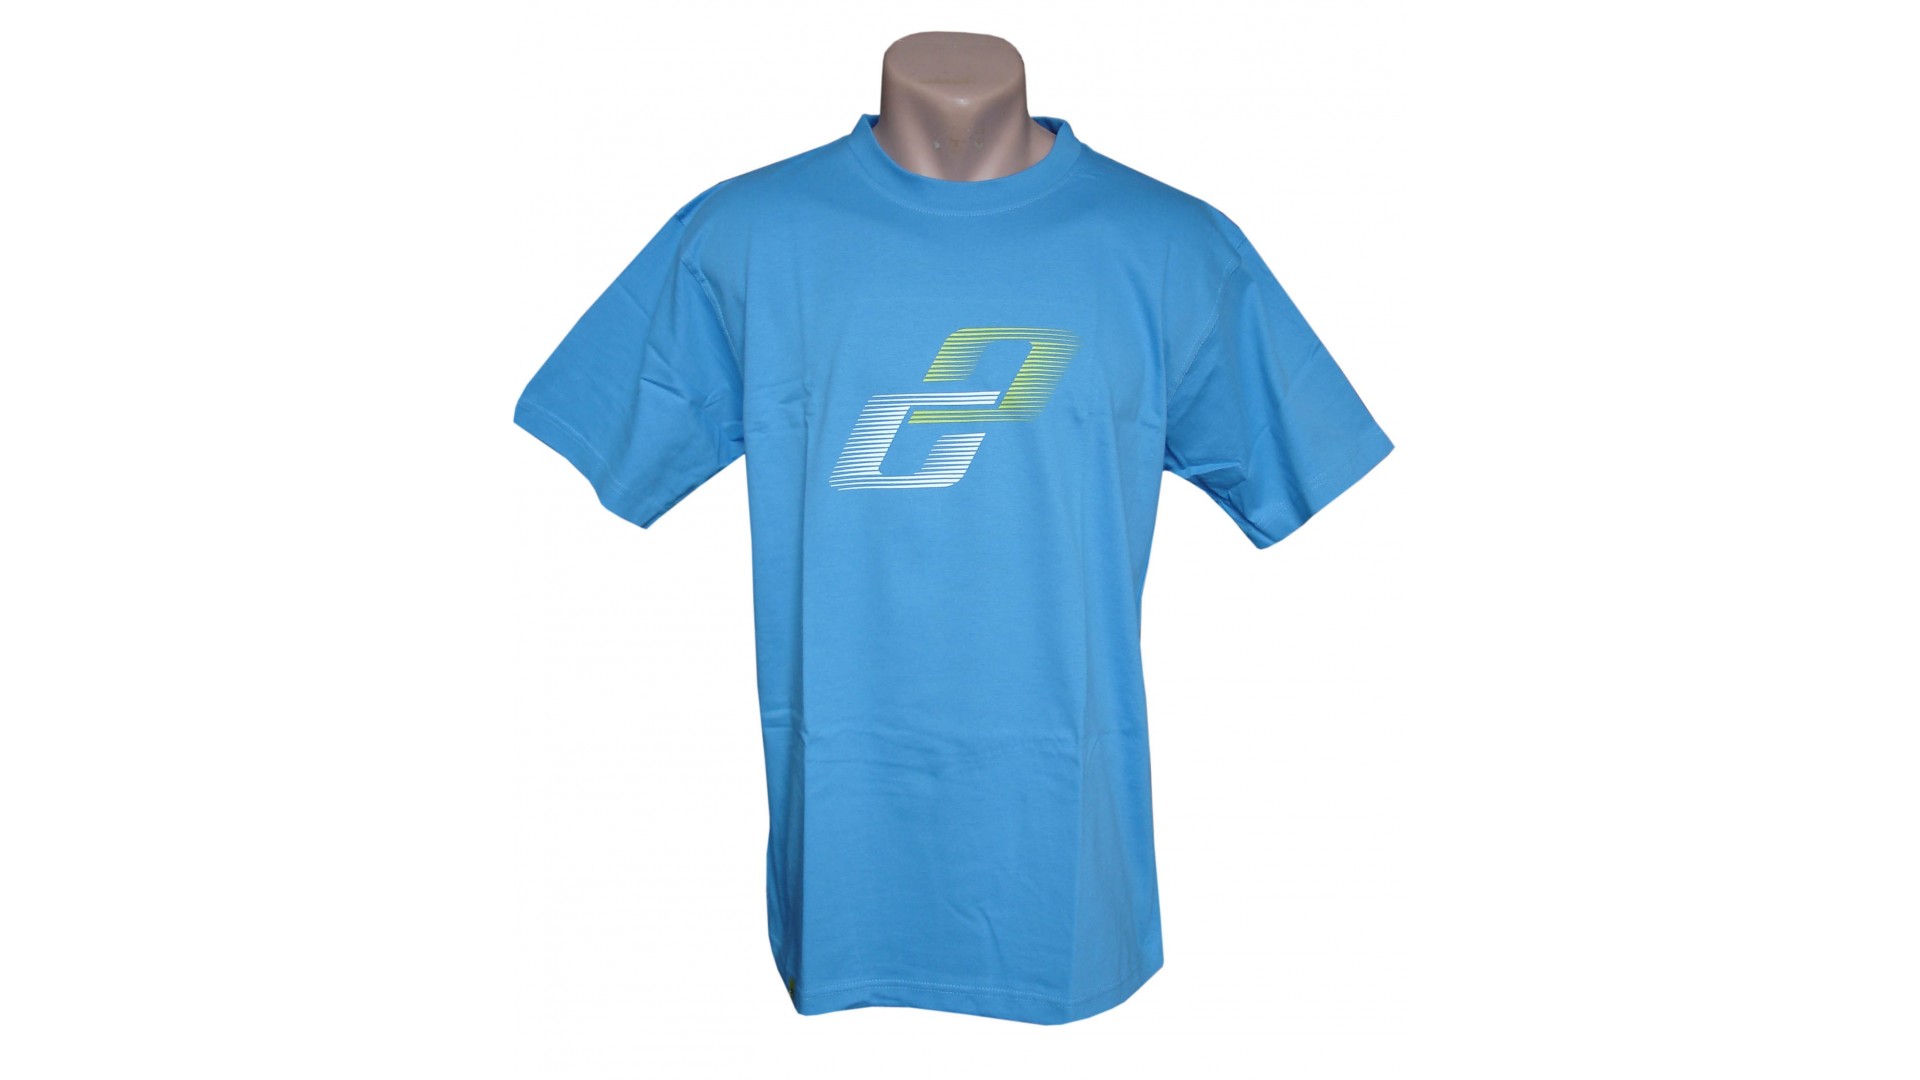 Футболка Ghost T-shirt blue год 2015 вид спереди